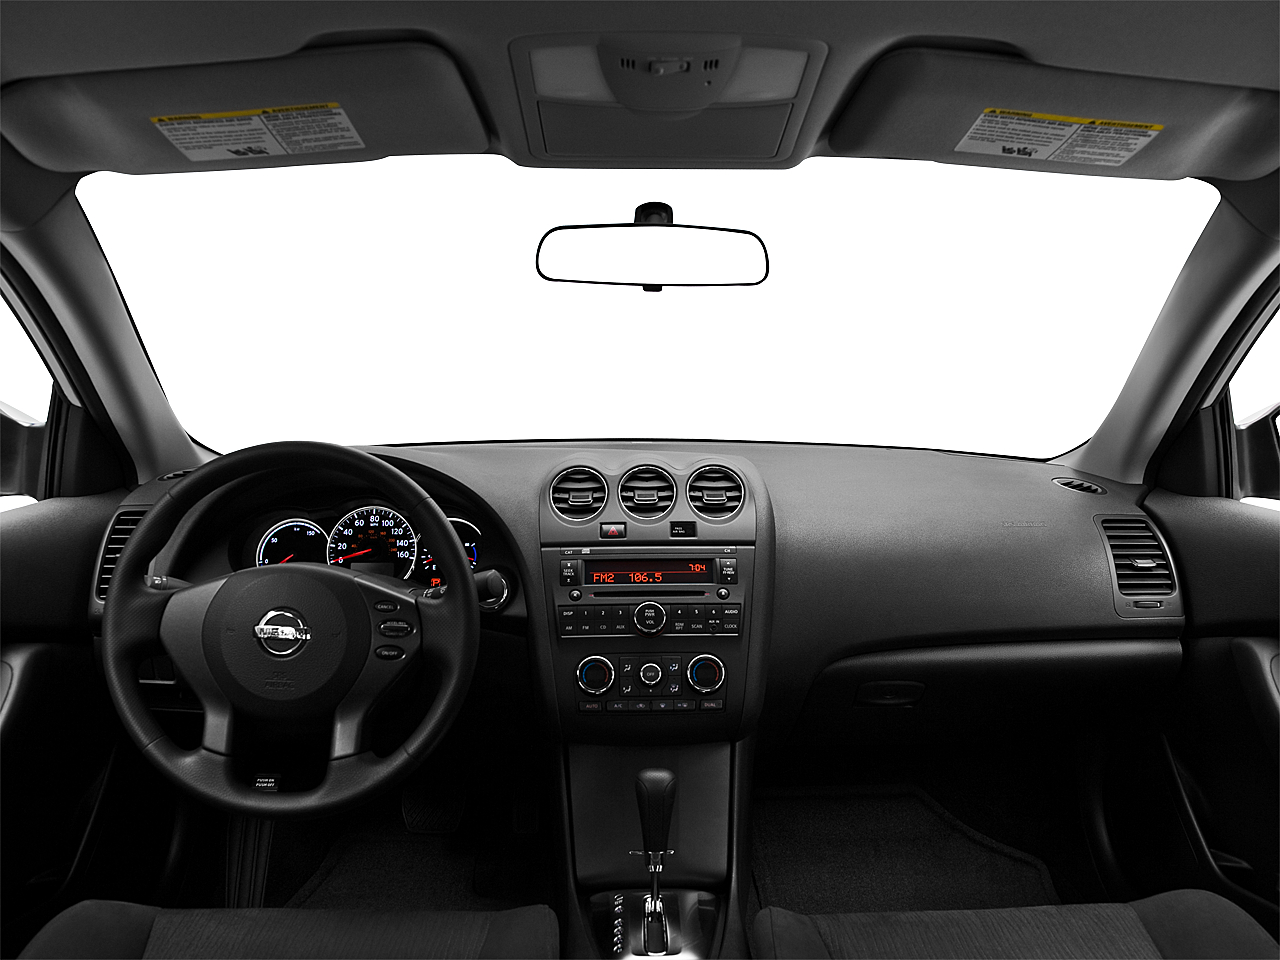 2010 Nissan Altima Hybrid Base 4dr Sedan - Research - GrooveCar